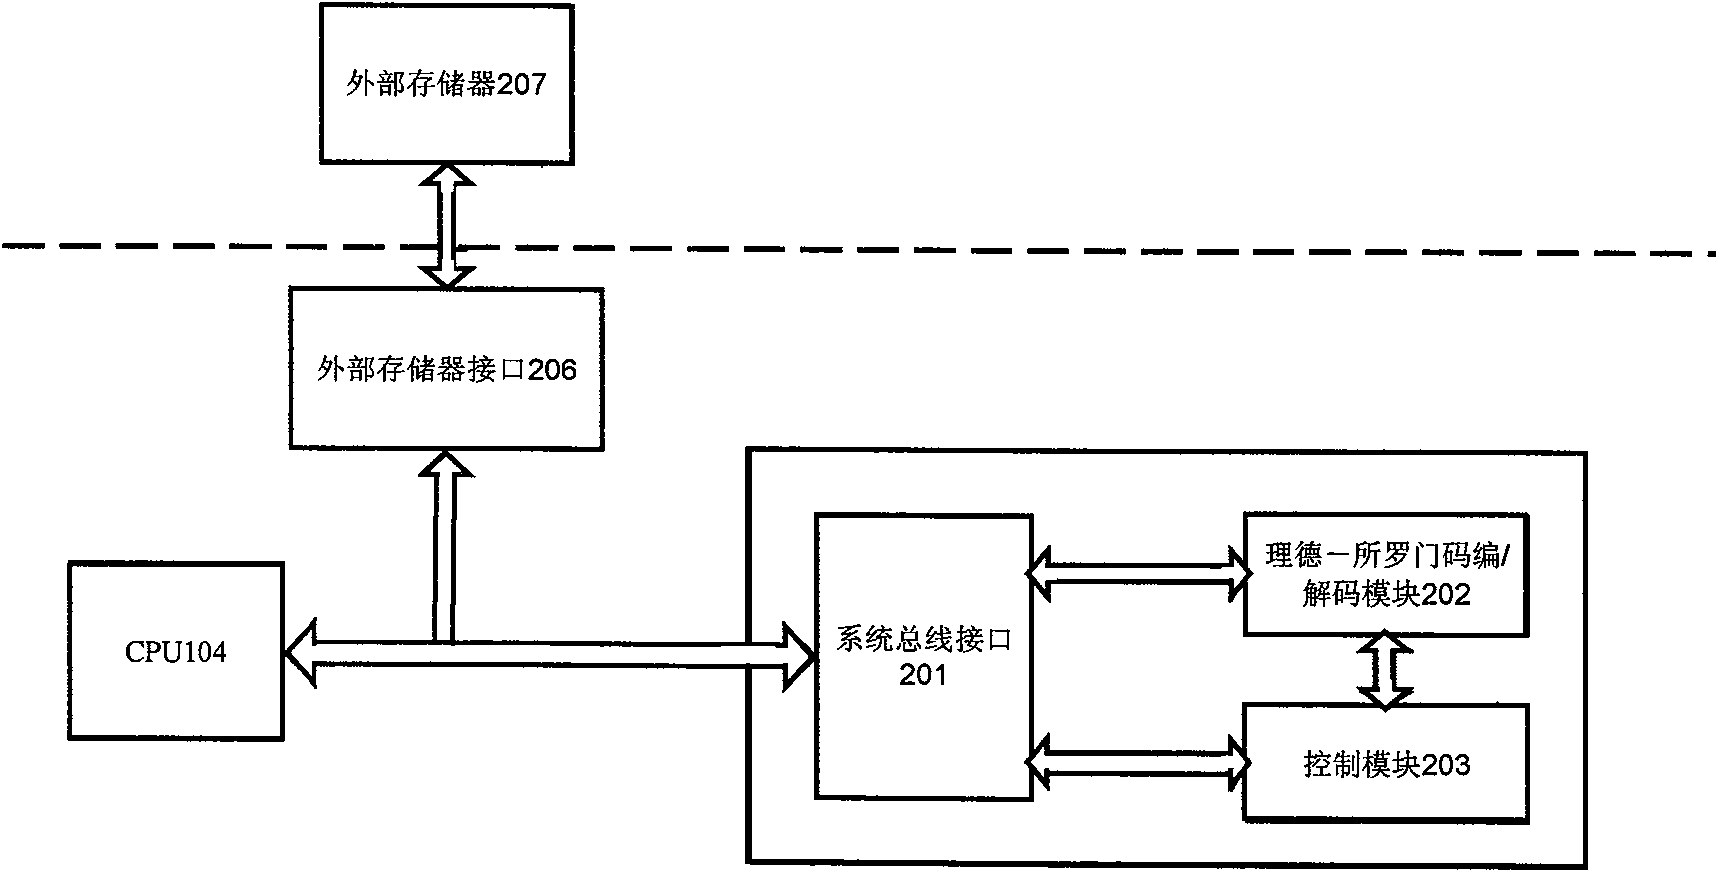 ECC controller based on Reed-Solomon codes